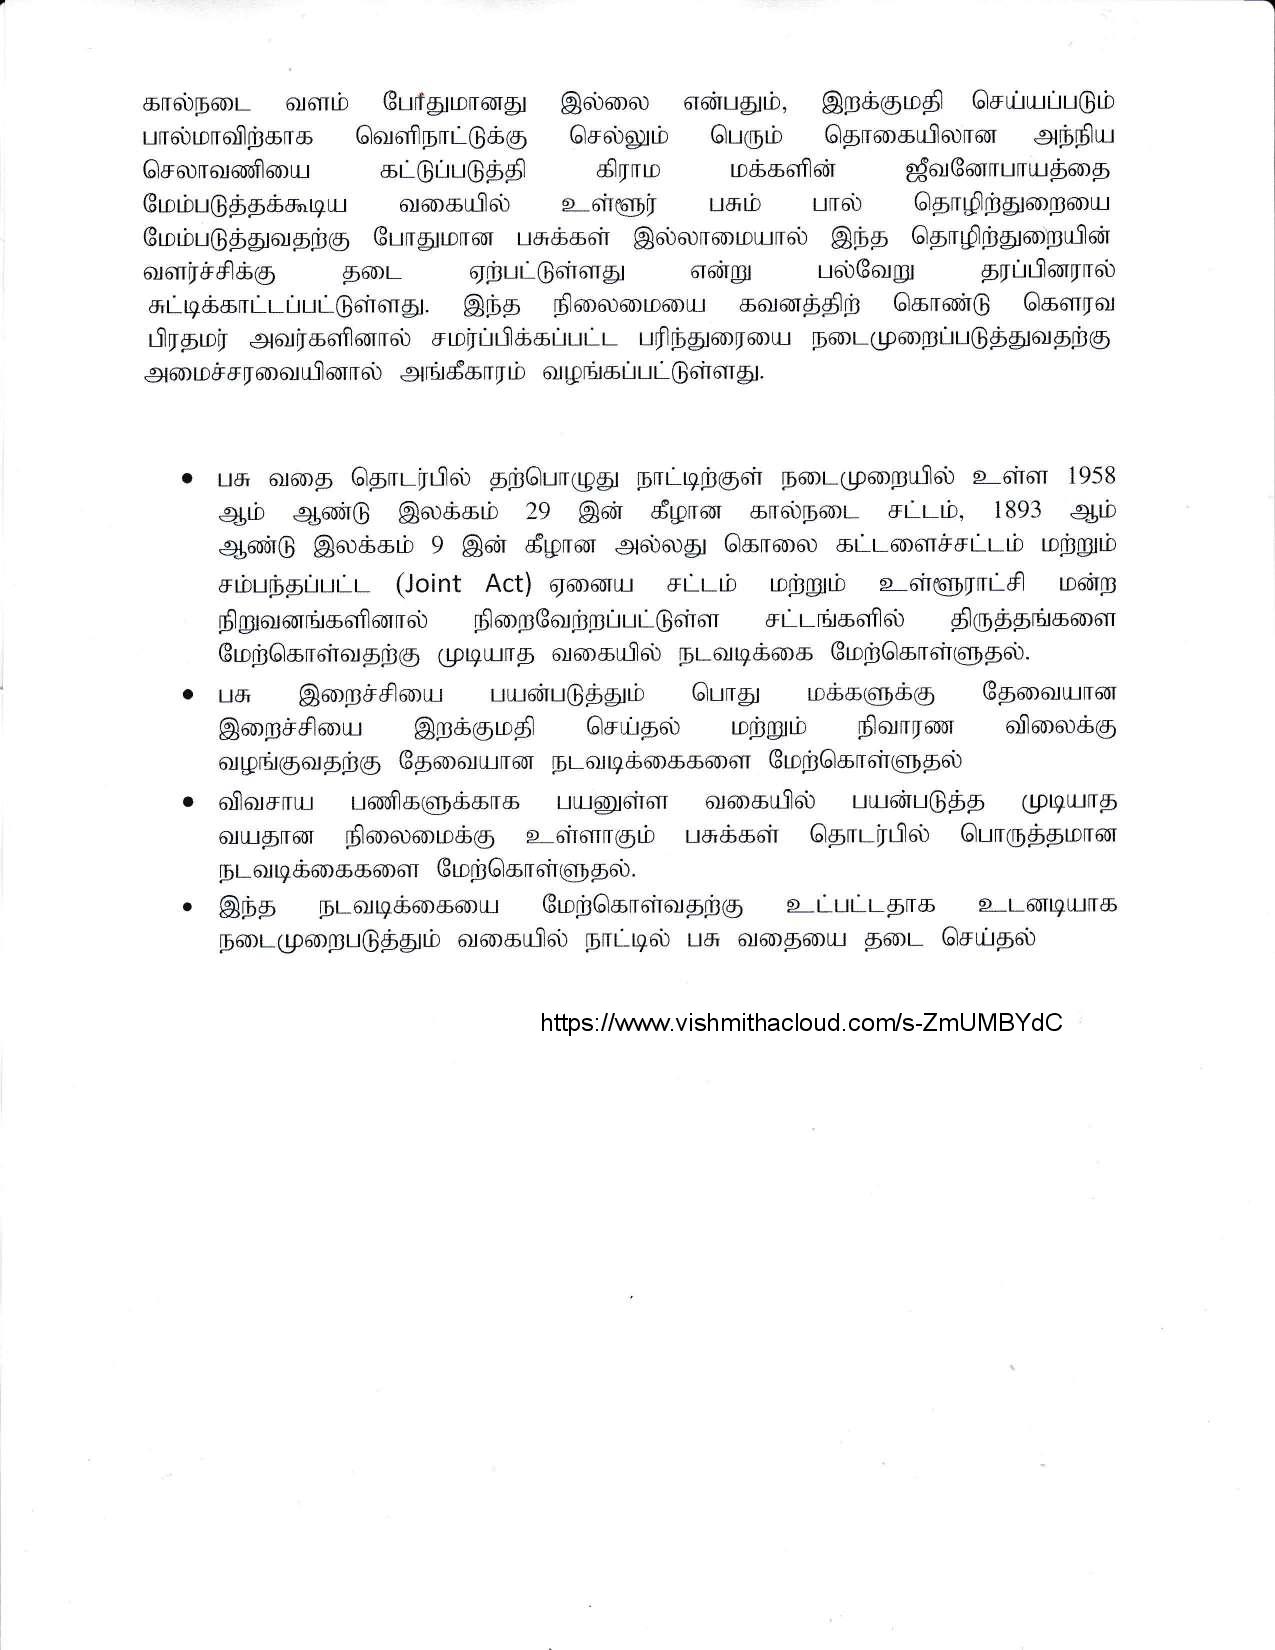 cabinet Desicion on 28.09.2020 Tamil 1 page 010